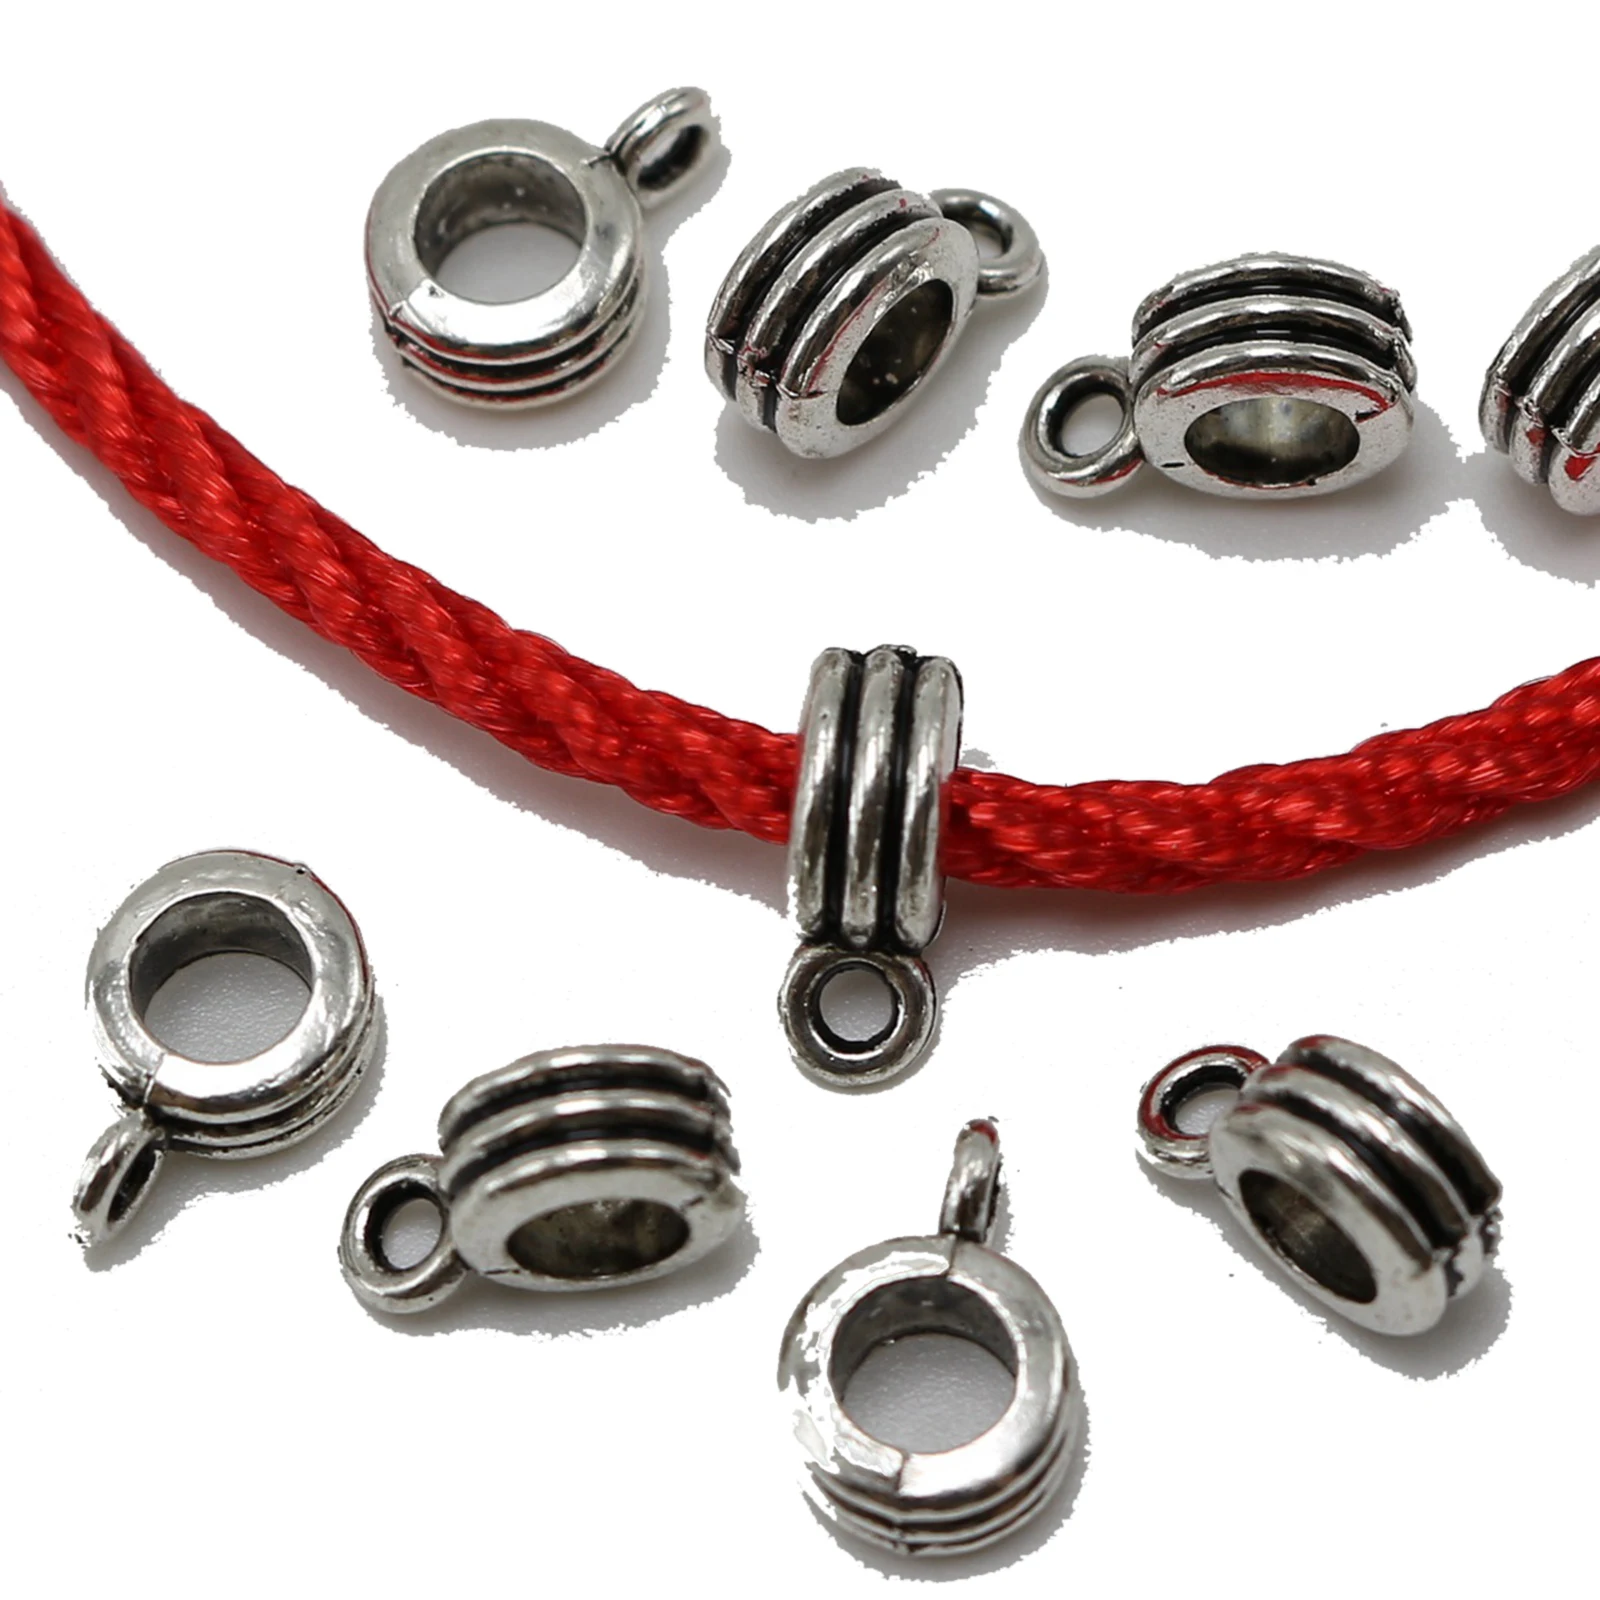 

25 Tibetan Silver Barrel Bails 12X8mm Charm Beads Craft Pendant Hanger Links